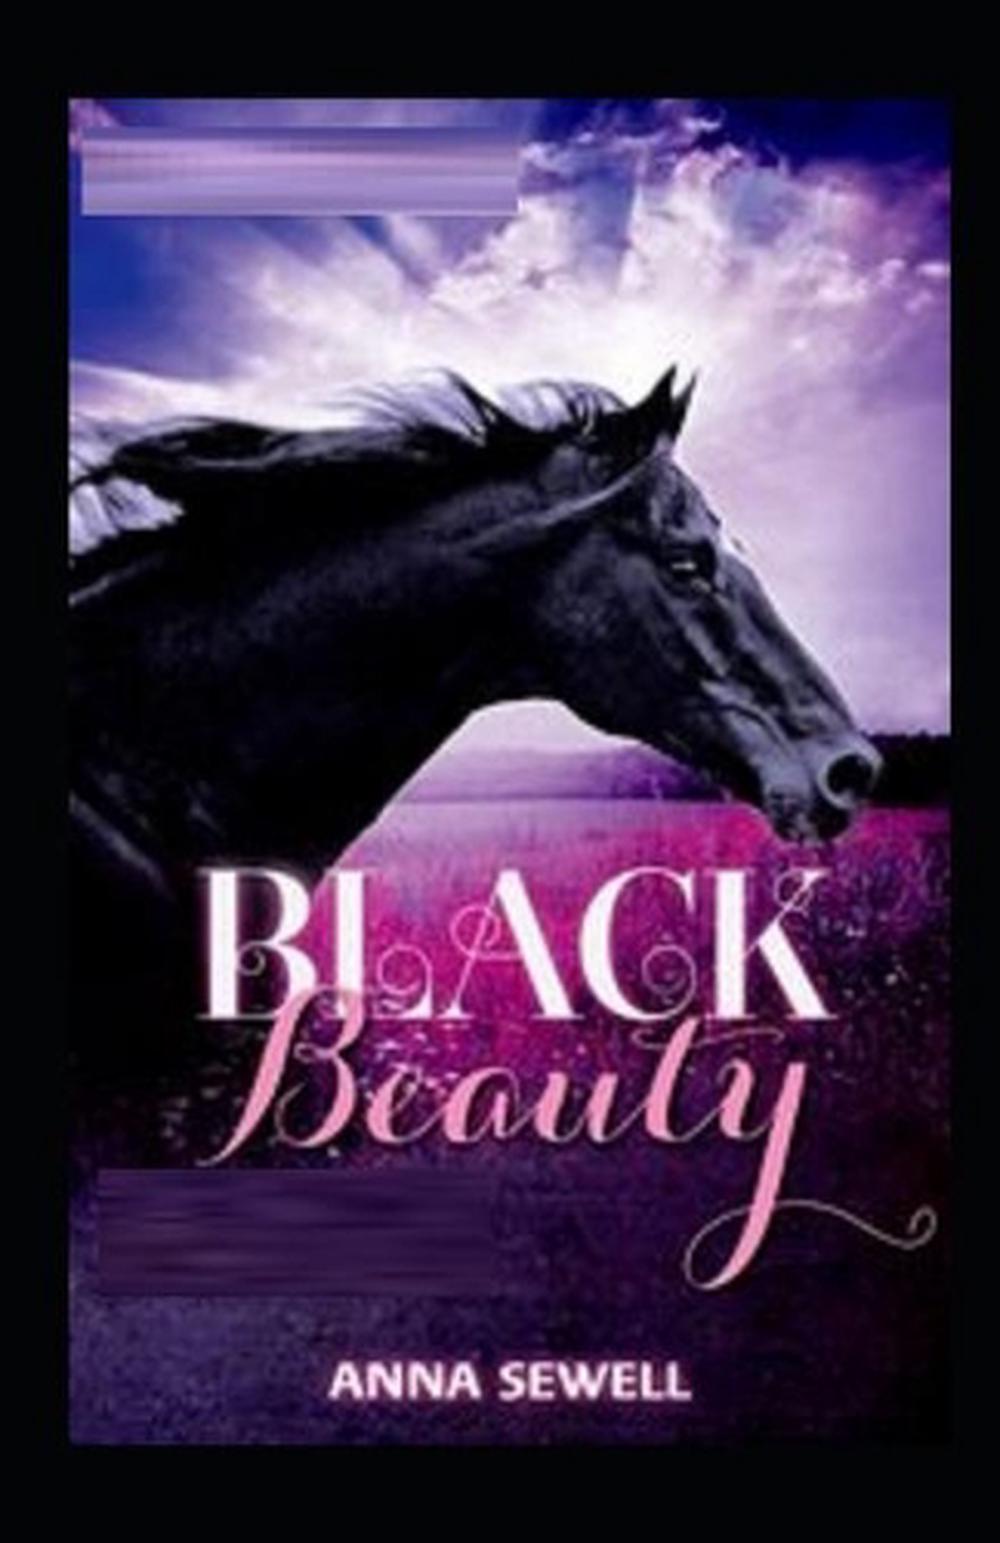 black beauty book review essay